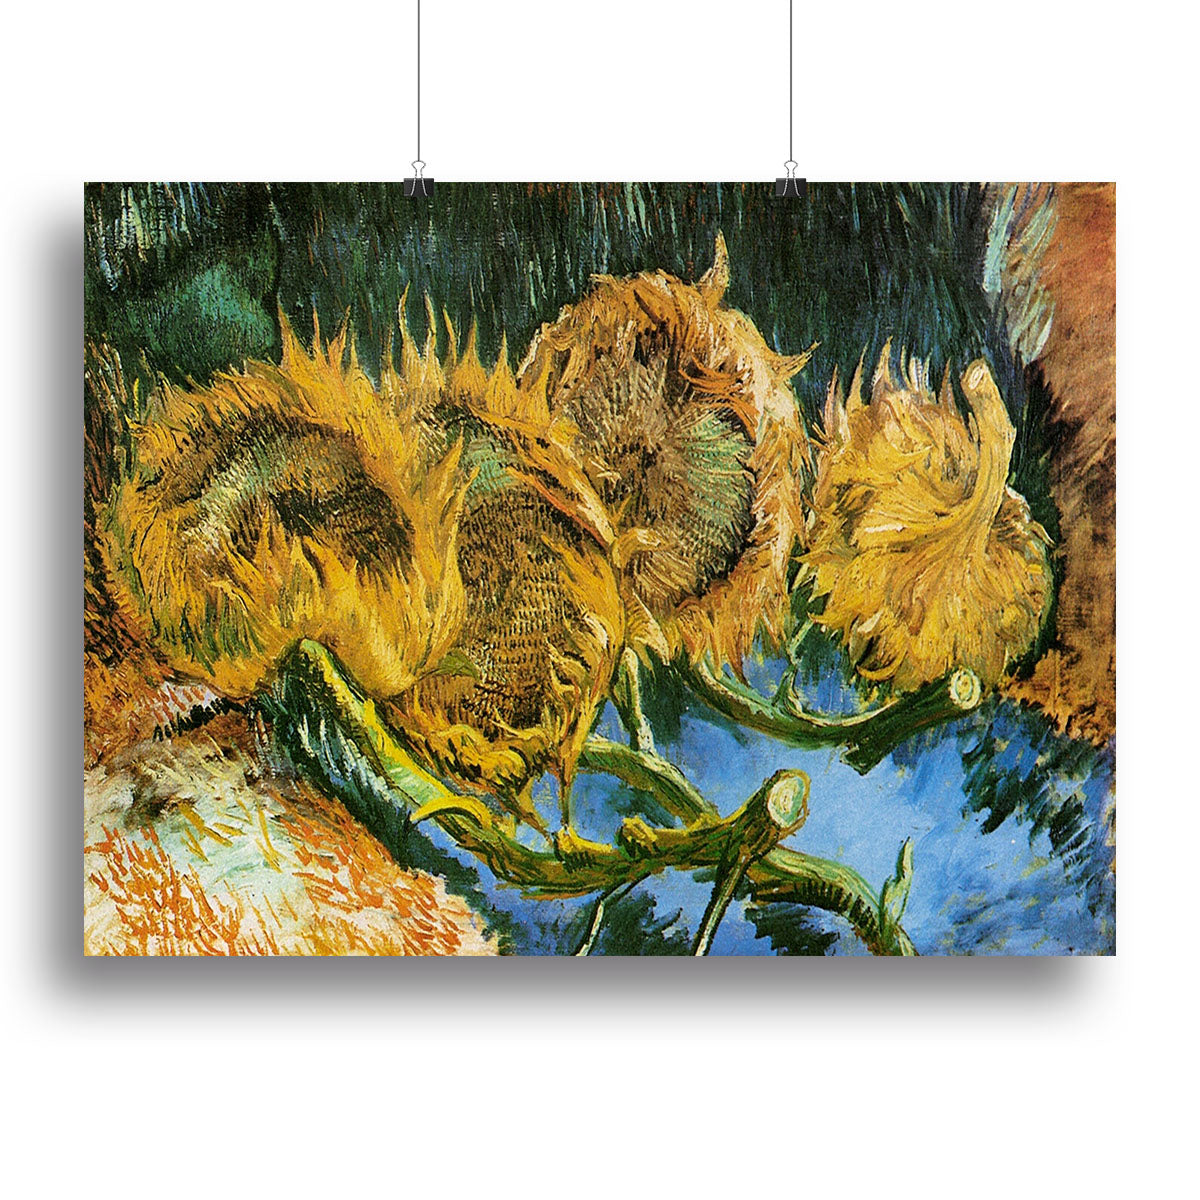 Four Cut Sunflowers by Van Gogh Canvas Print or Poster - Canvas Art Rocks - 2